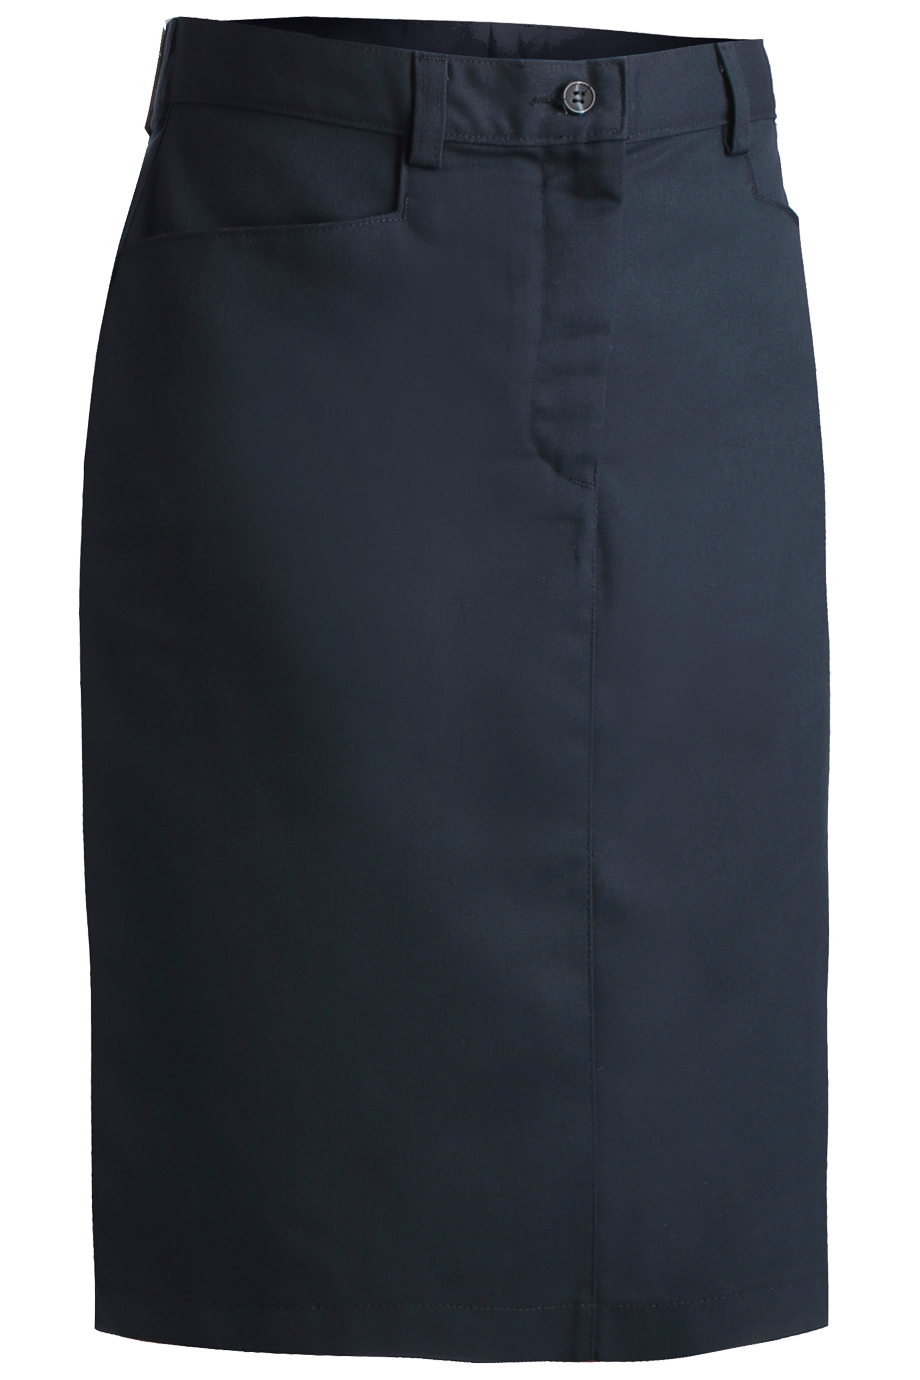 Buy Edwards Ladies Blended Chino Skirt-Medium Length - Edwards Online ...